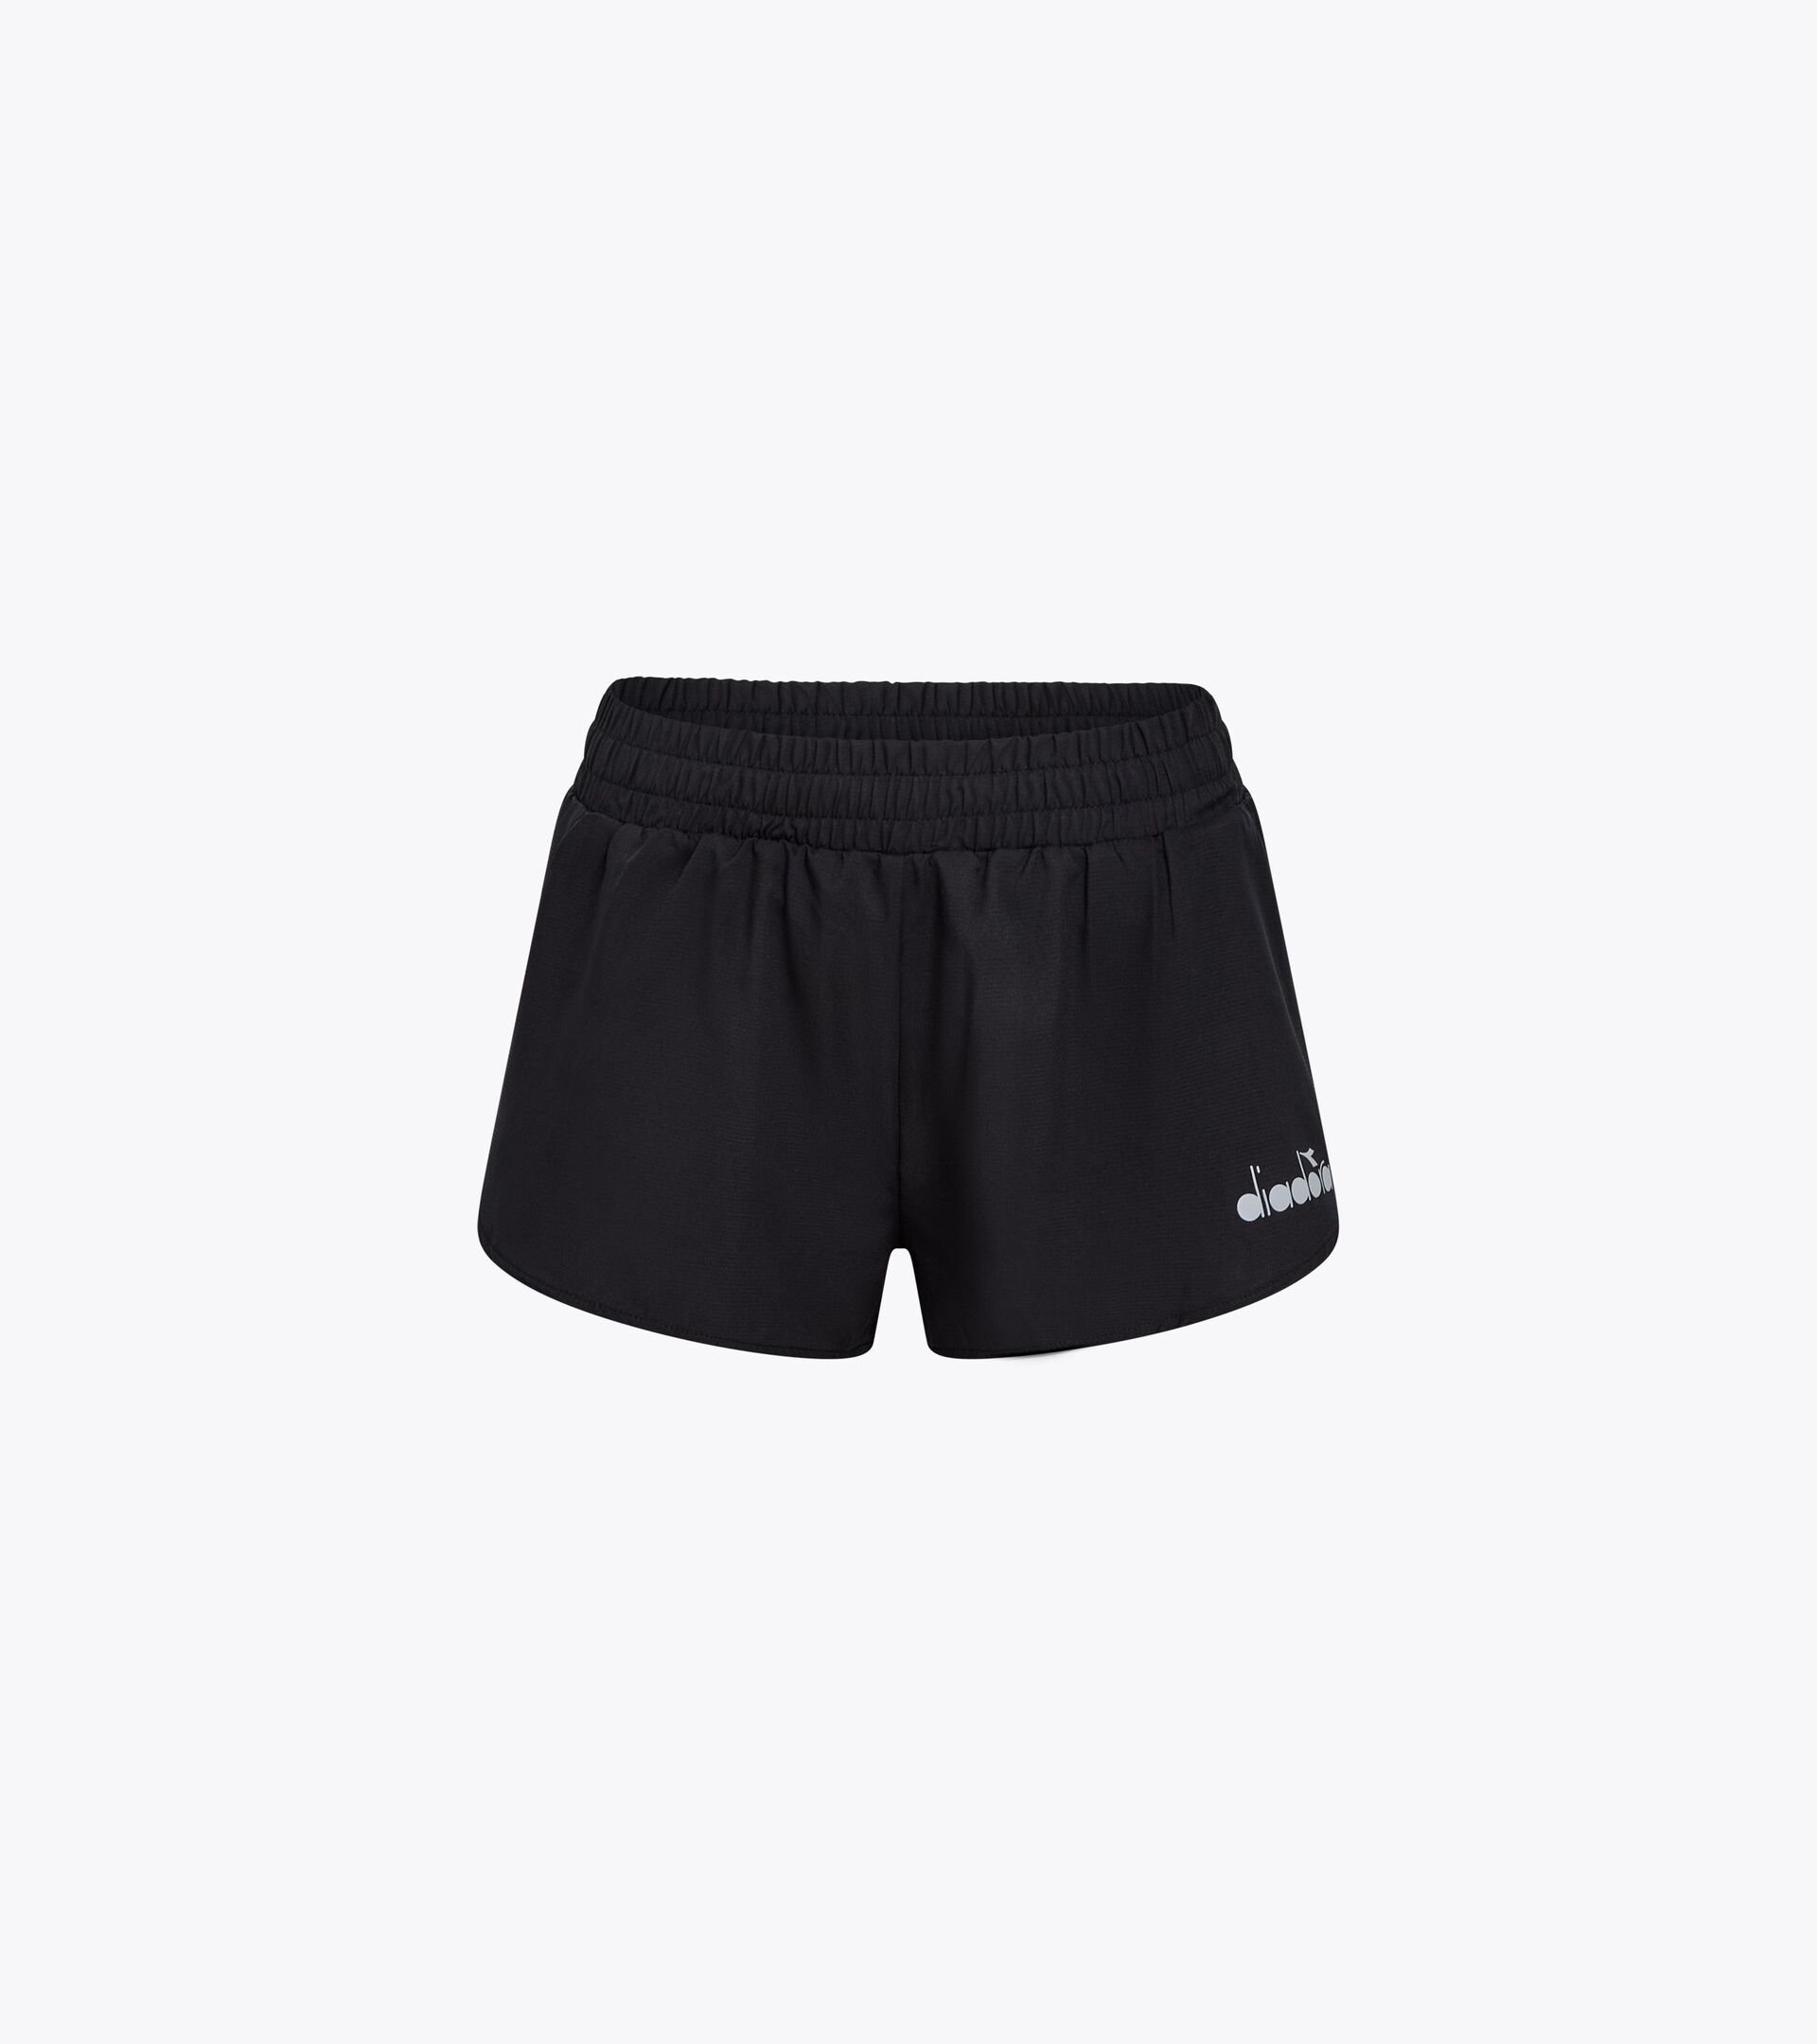 2,5’’ running shorts - Light fabric - Women’s L. SUPER LIGHT SHORTS 2.5" BLACK - Diadora